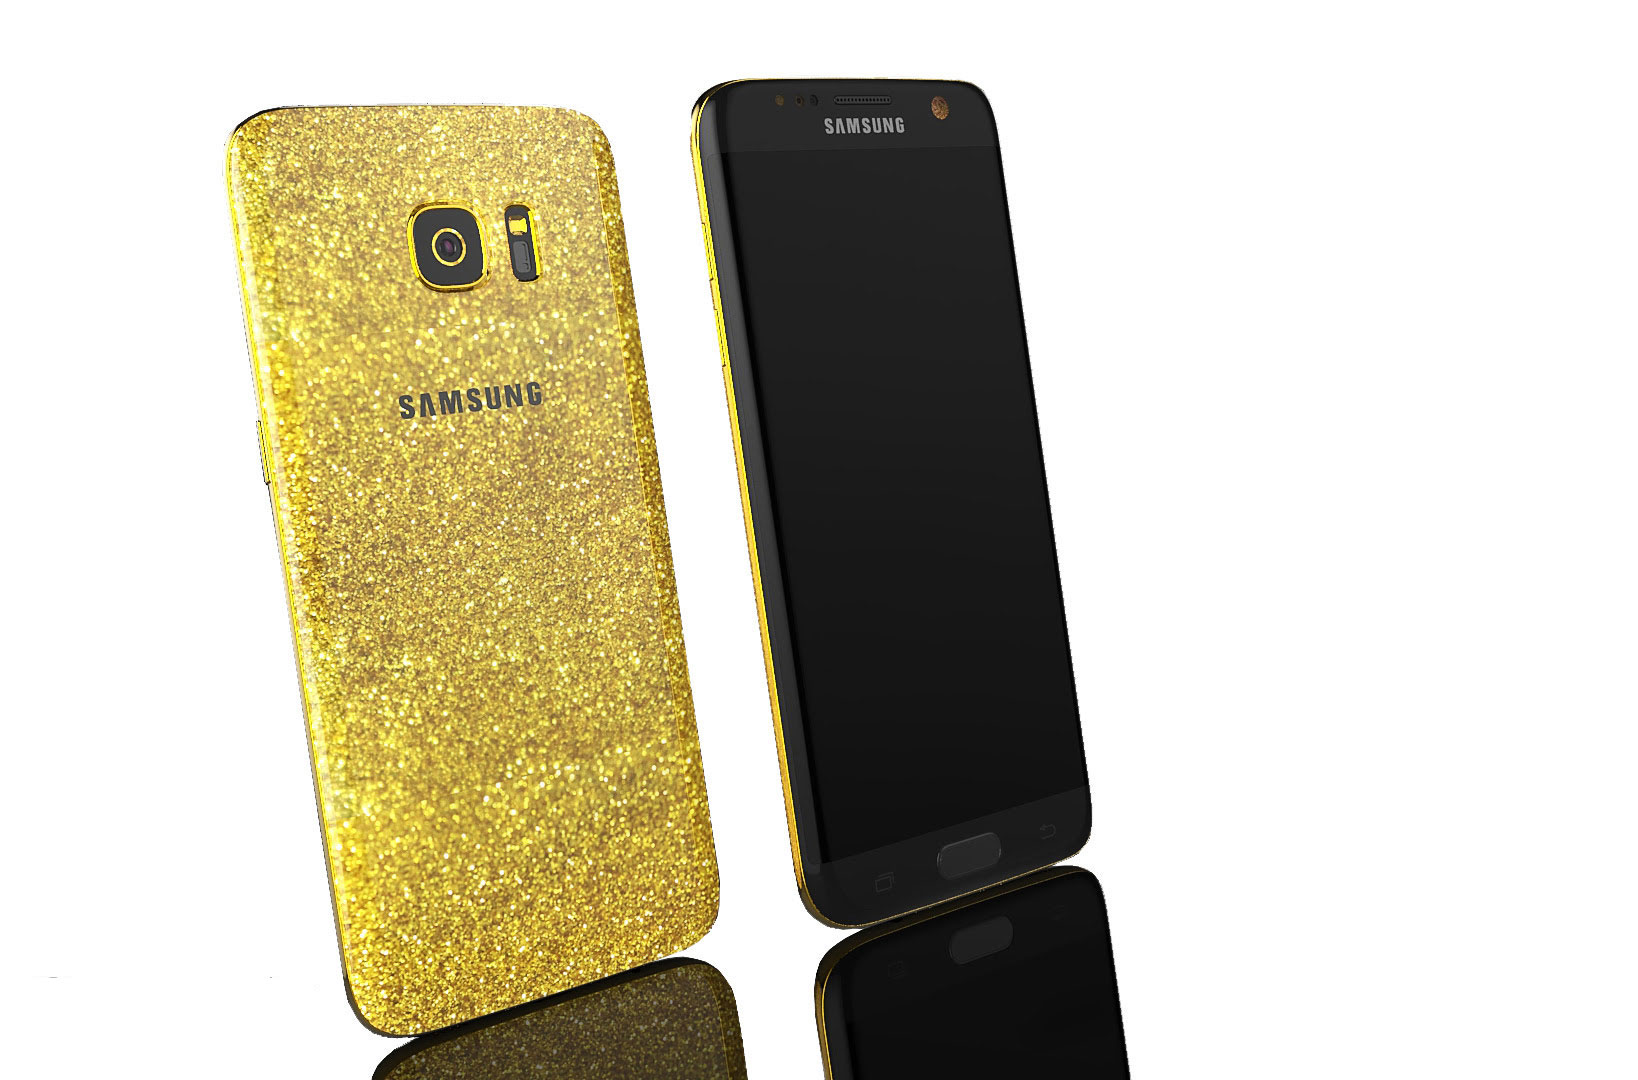 Samsung galaxy gold 3. Samsung Gold. Galaxy s7 золотой. Самсунг золотистый смартфон. Самсунг золотого цвета а8.